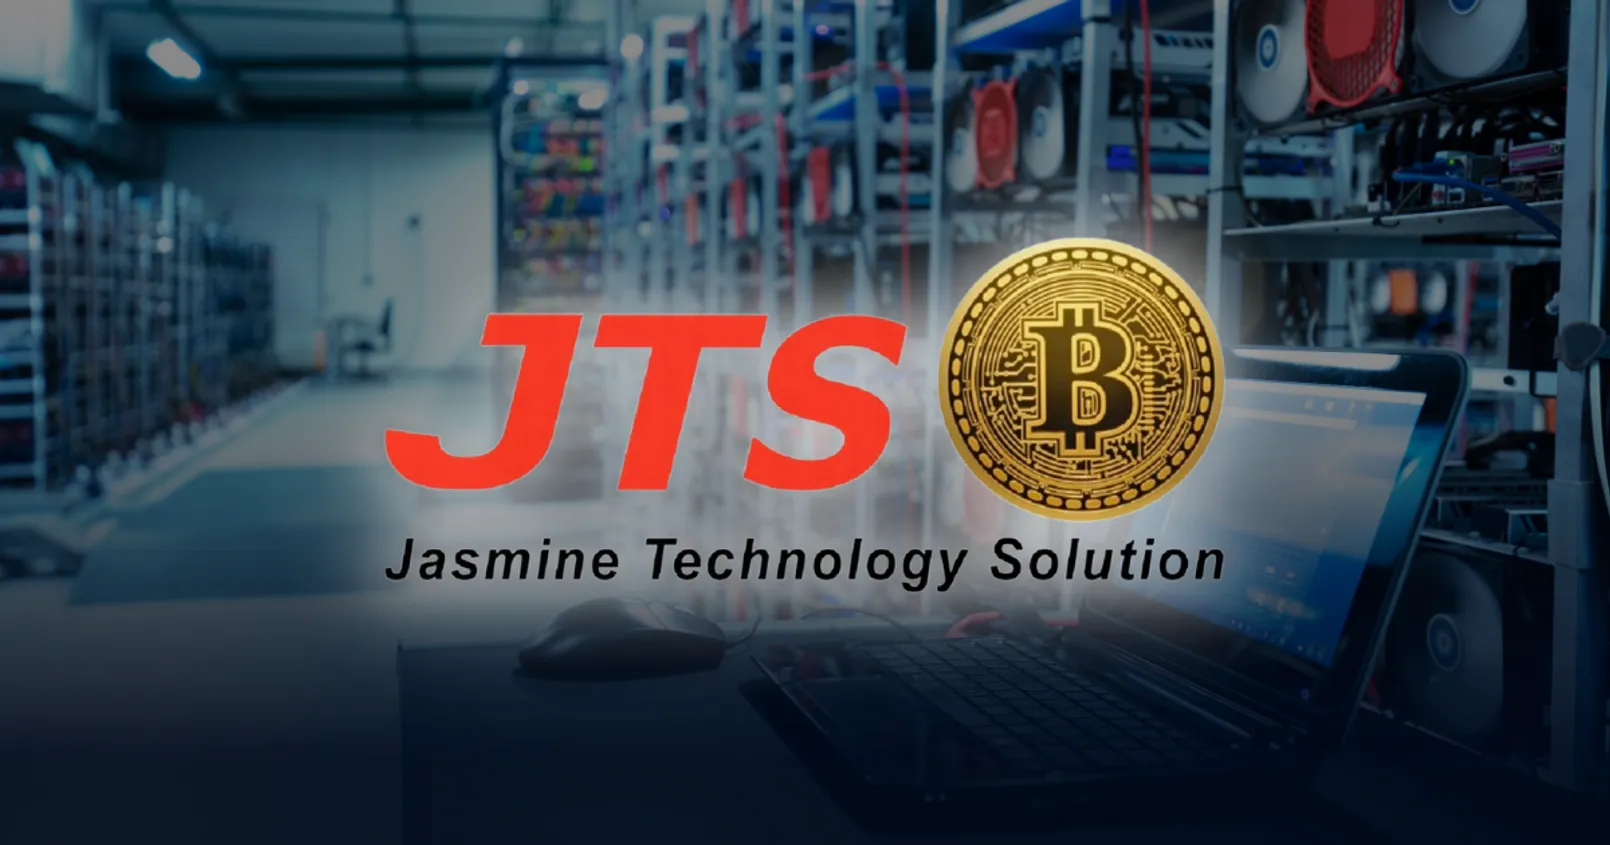 JTS ลุย Bitcoin ต่อ! เดินหน้าขยายธุรกิจสู่ Algorithm Trading - Lightning Network